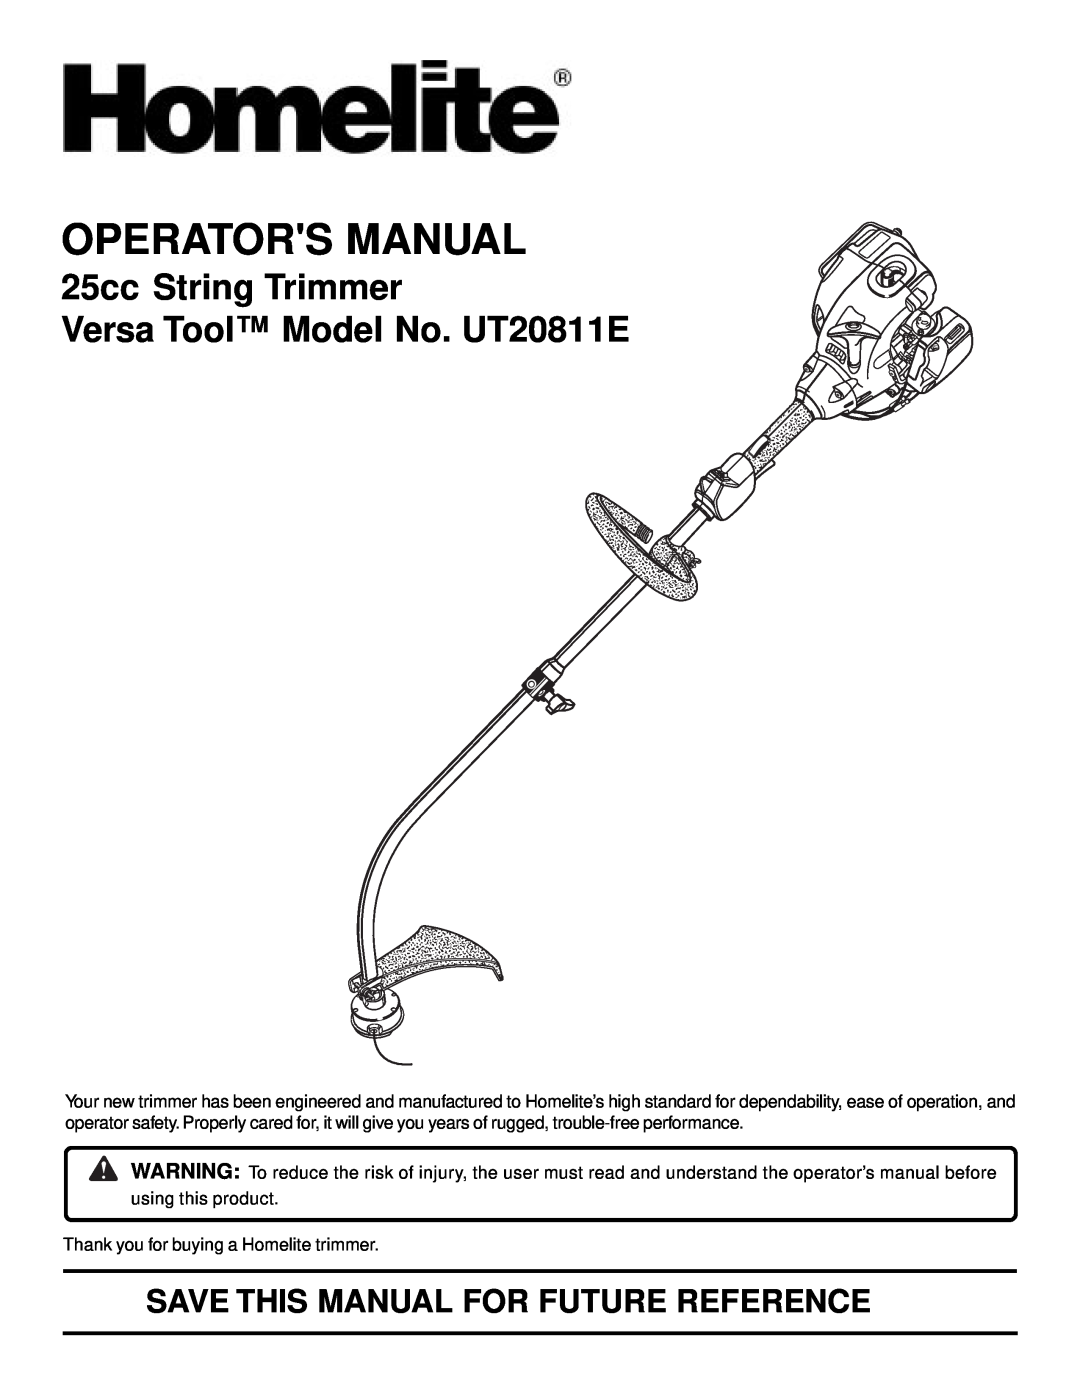 Homelite manual Operators Manual, 25cc String Trimmer Versa Tool Model No. UT20811E 